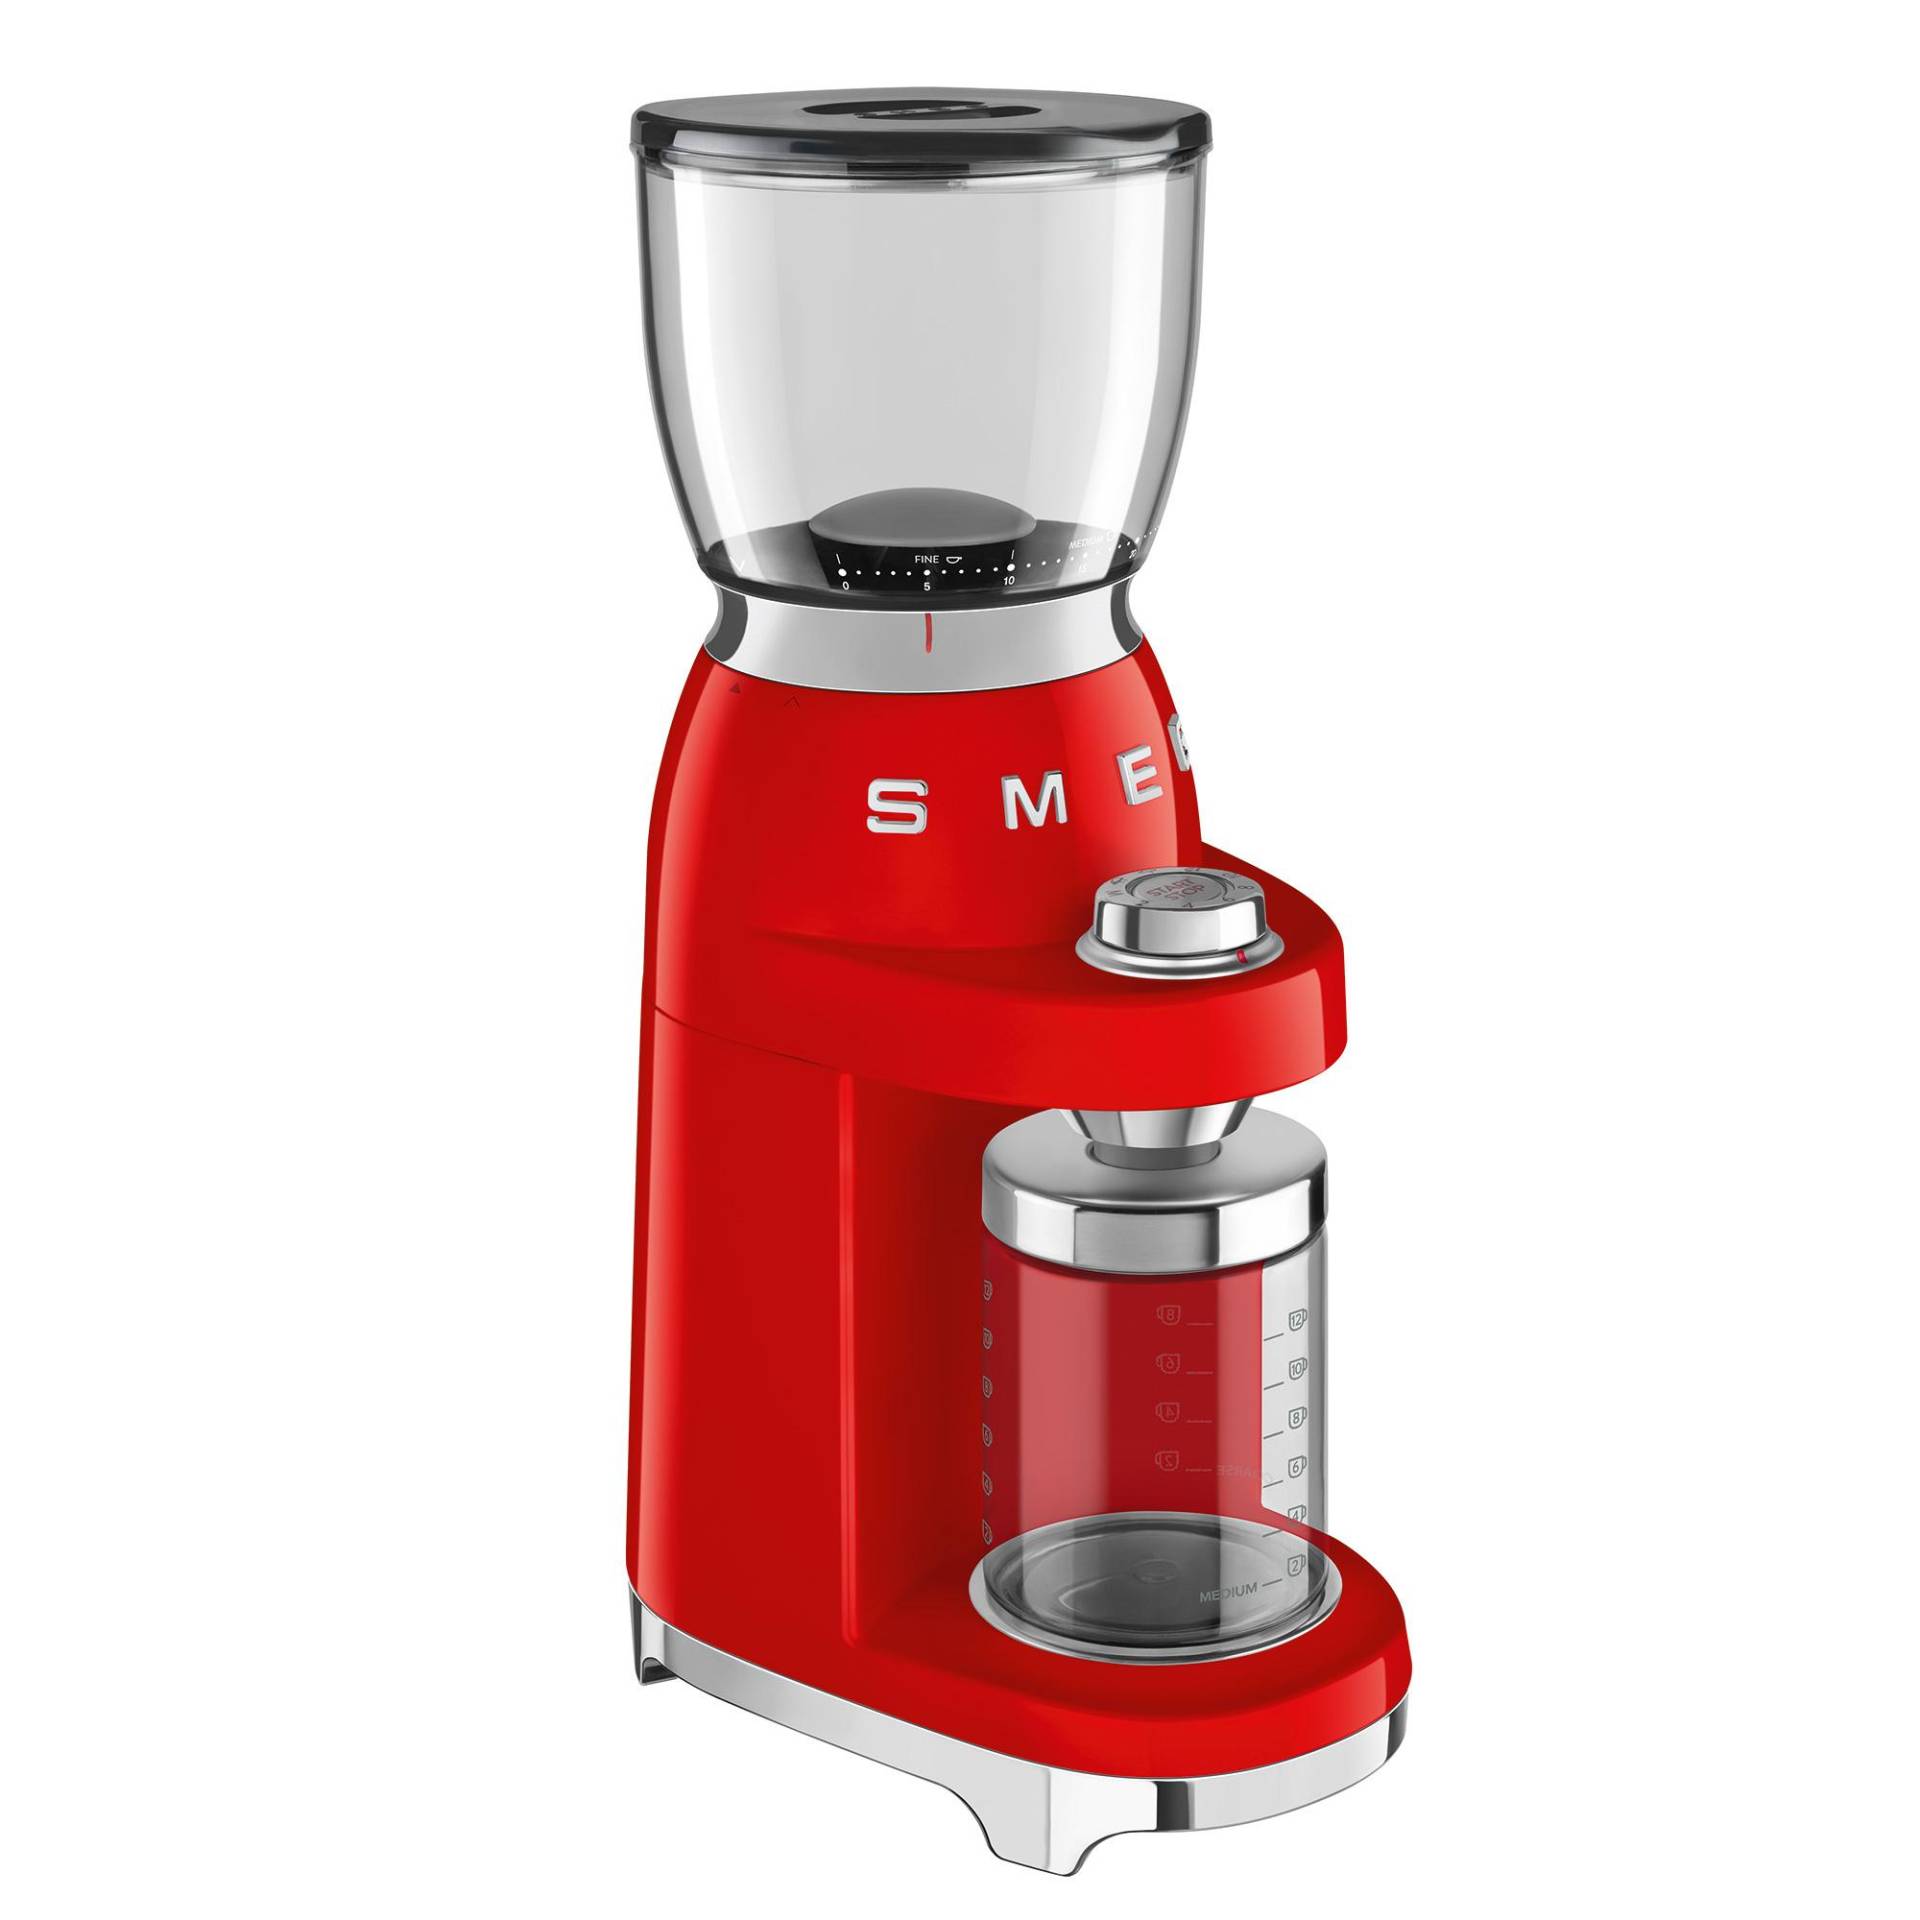 Smeg - CGF11 Kaffeemühle Tritan™ Renew - rot/lackiert/3 Mahlgrade/8 programmierte Mahlprogramme von Smeg